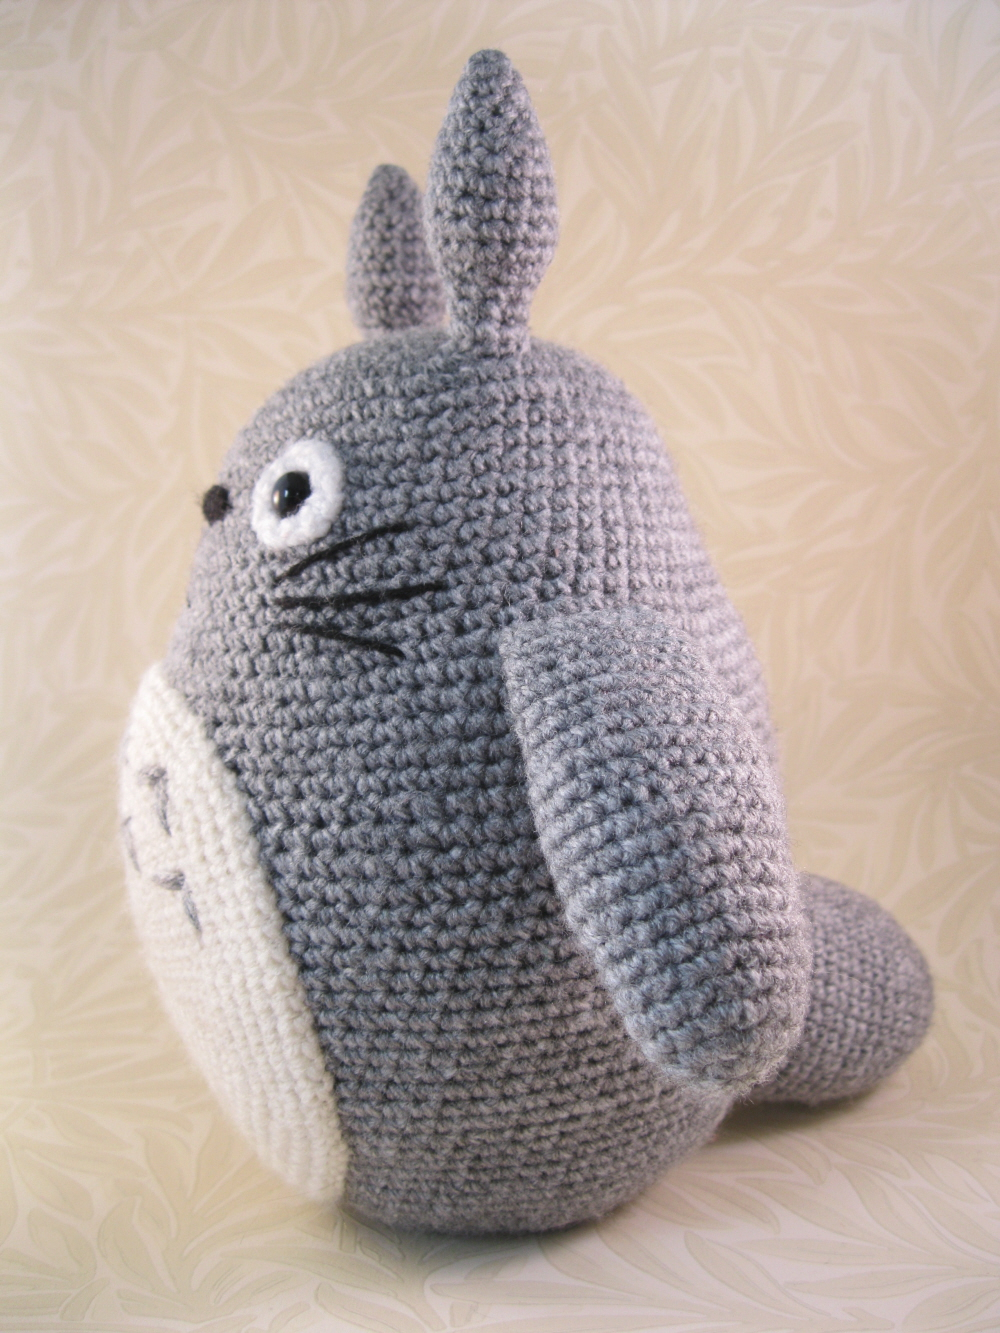 Crochet Totoro Hat Pattern Lucyravenscar Crochet Creatures All The Totoros